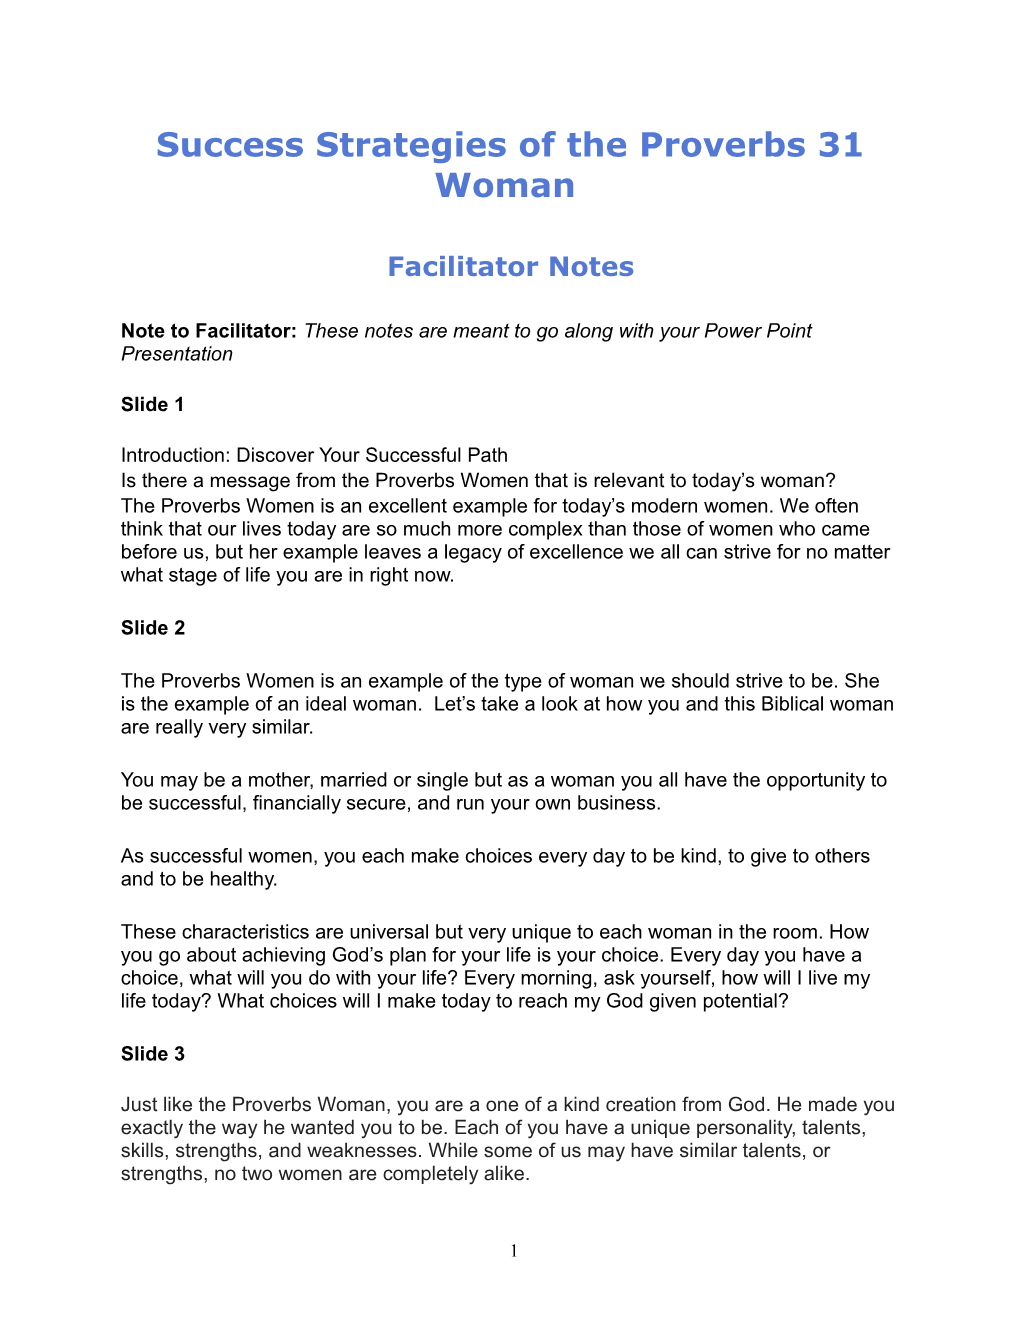 Success Strategies of the Proverbs 31 Woman Facilitator Notes